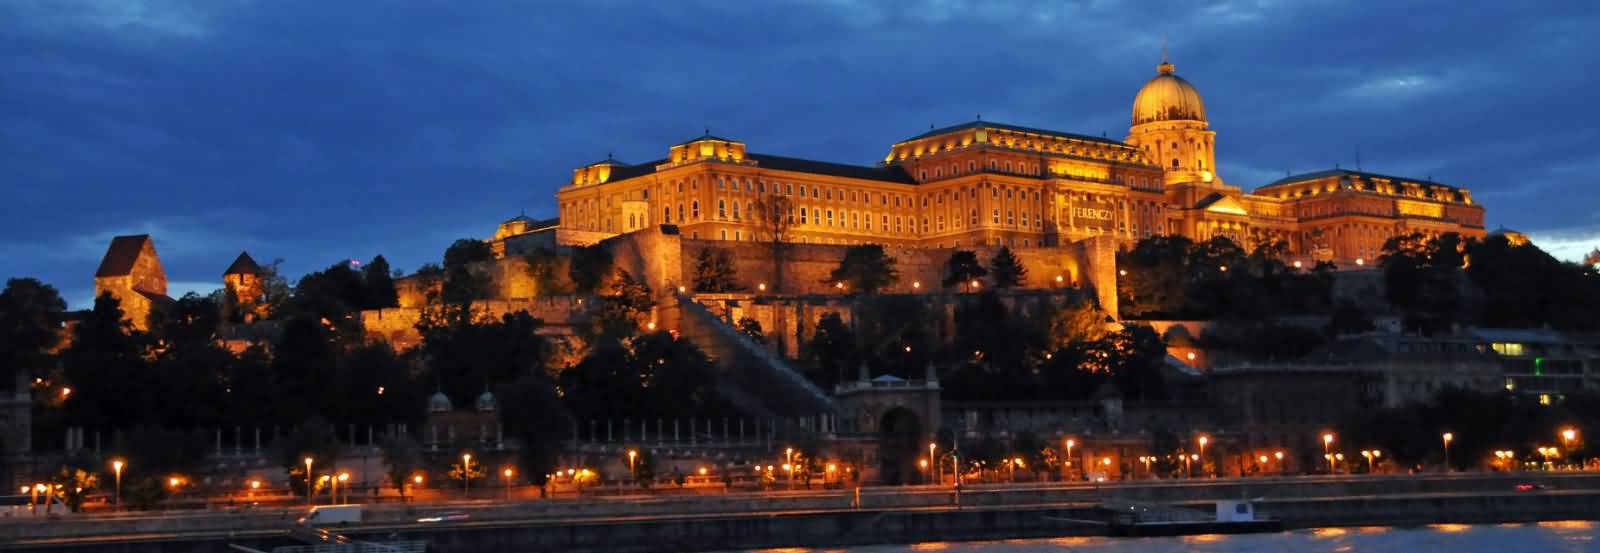 Buda Castle Lit Up At Night